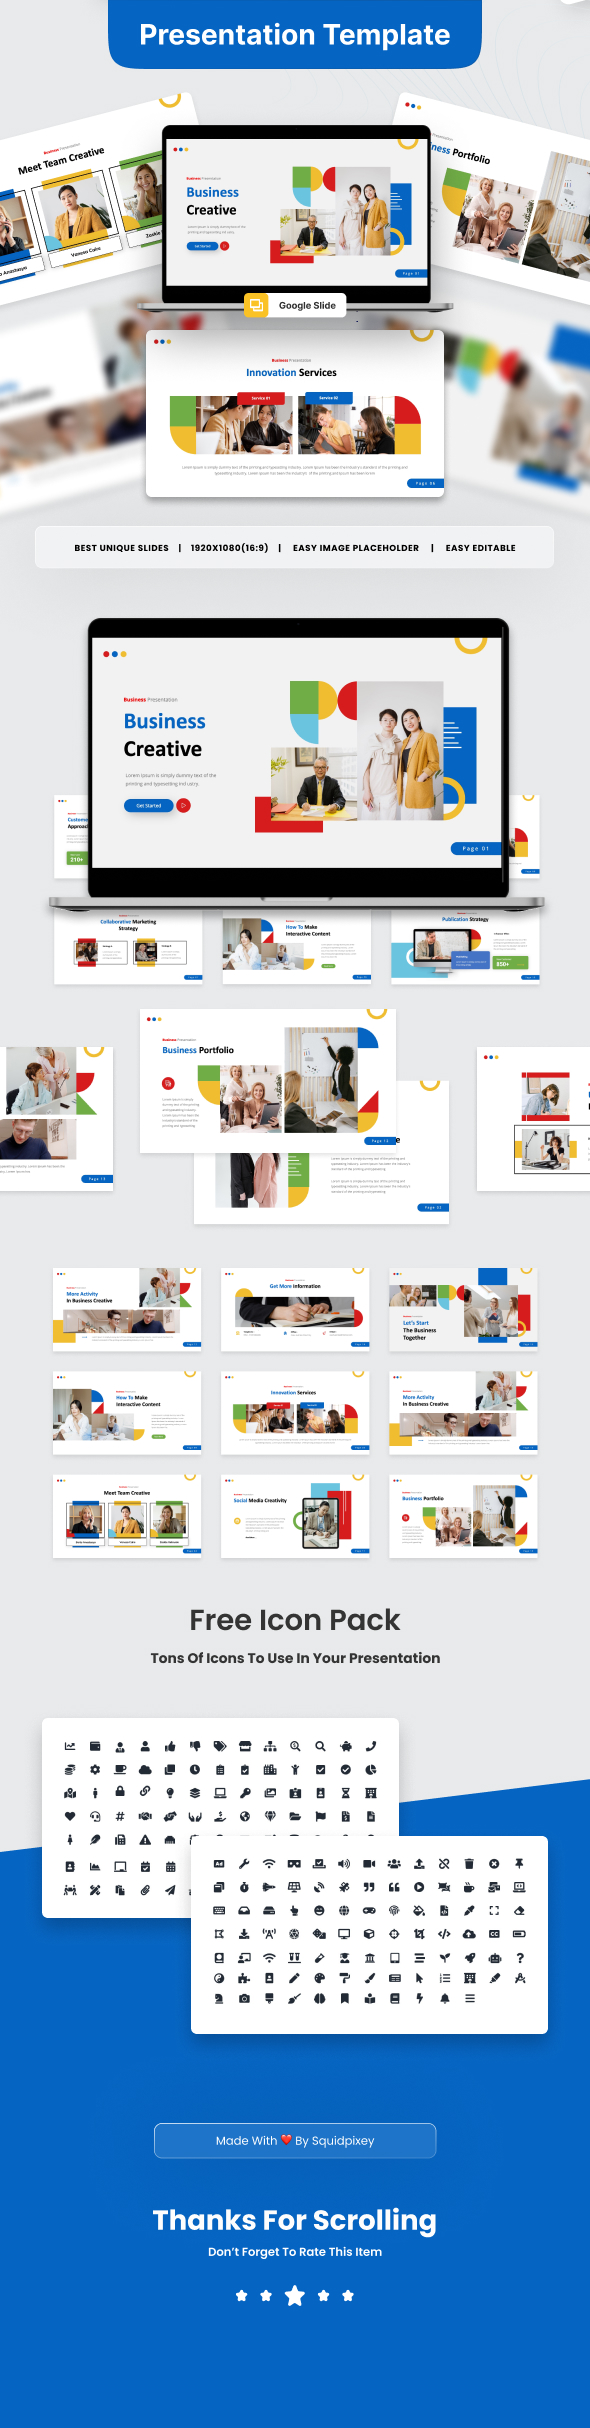 Business Creative Google Slide Presentation